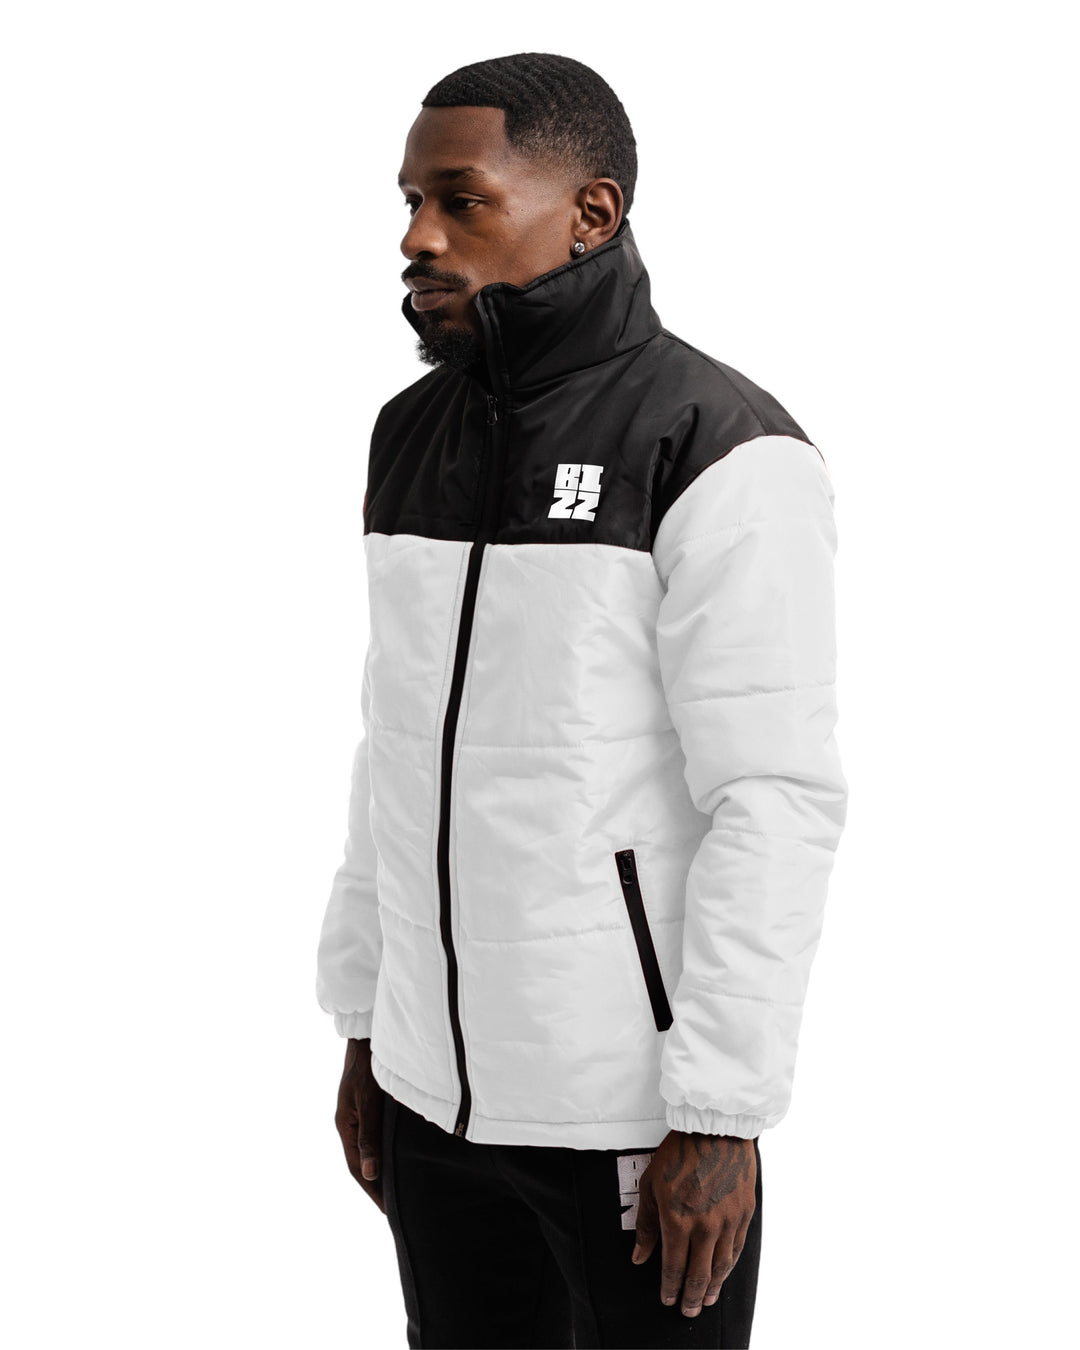 Club Puffer Jacket In White/Black